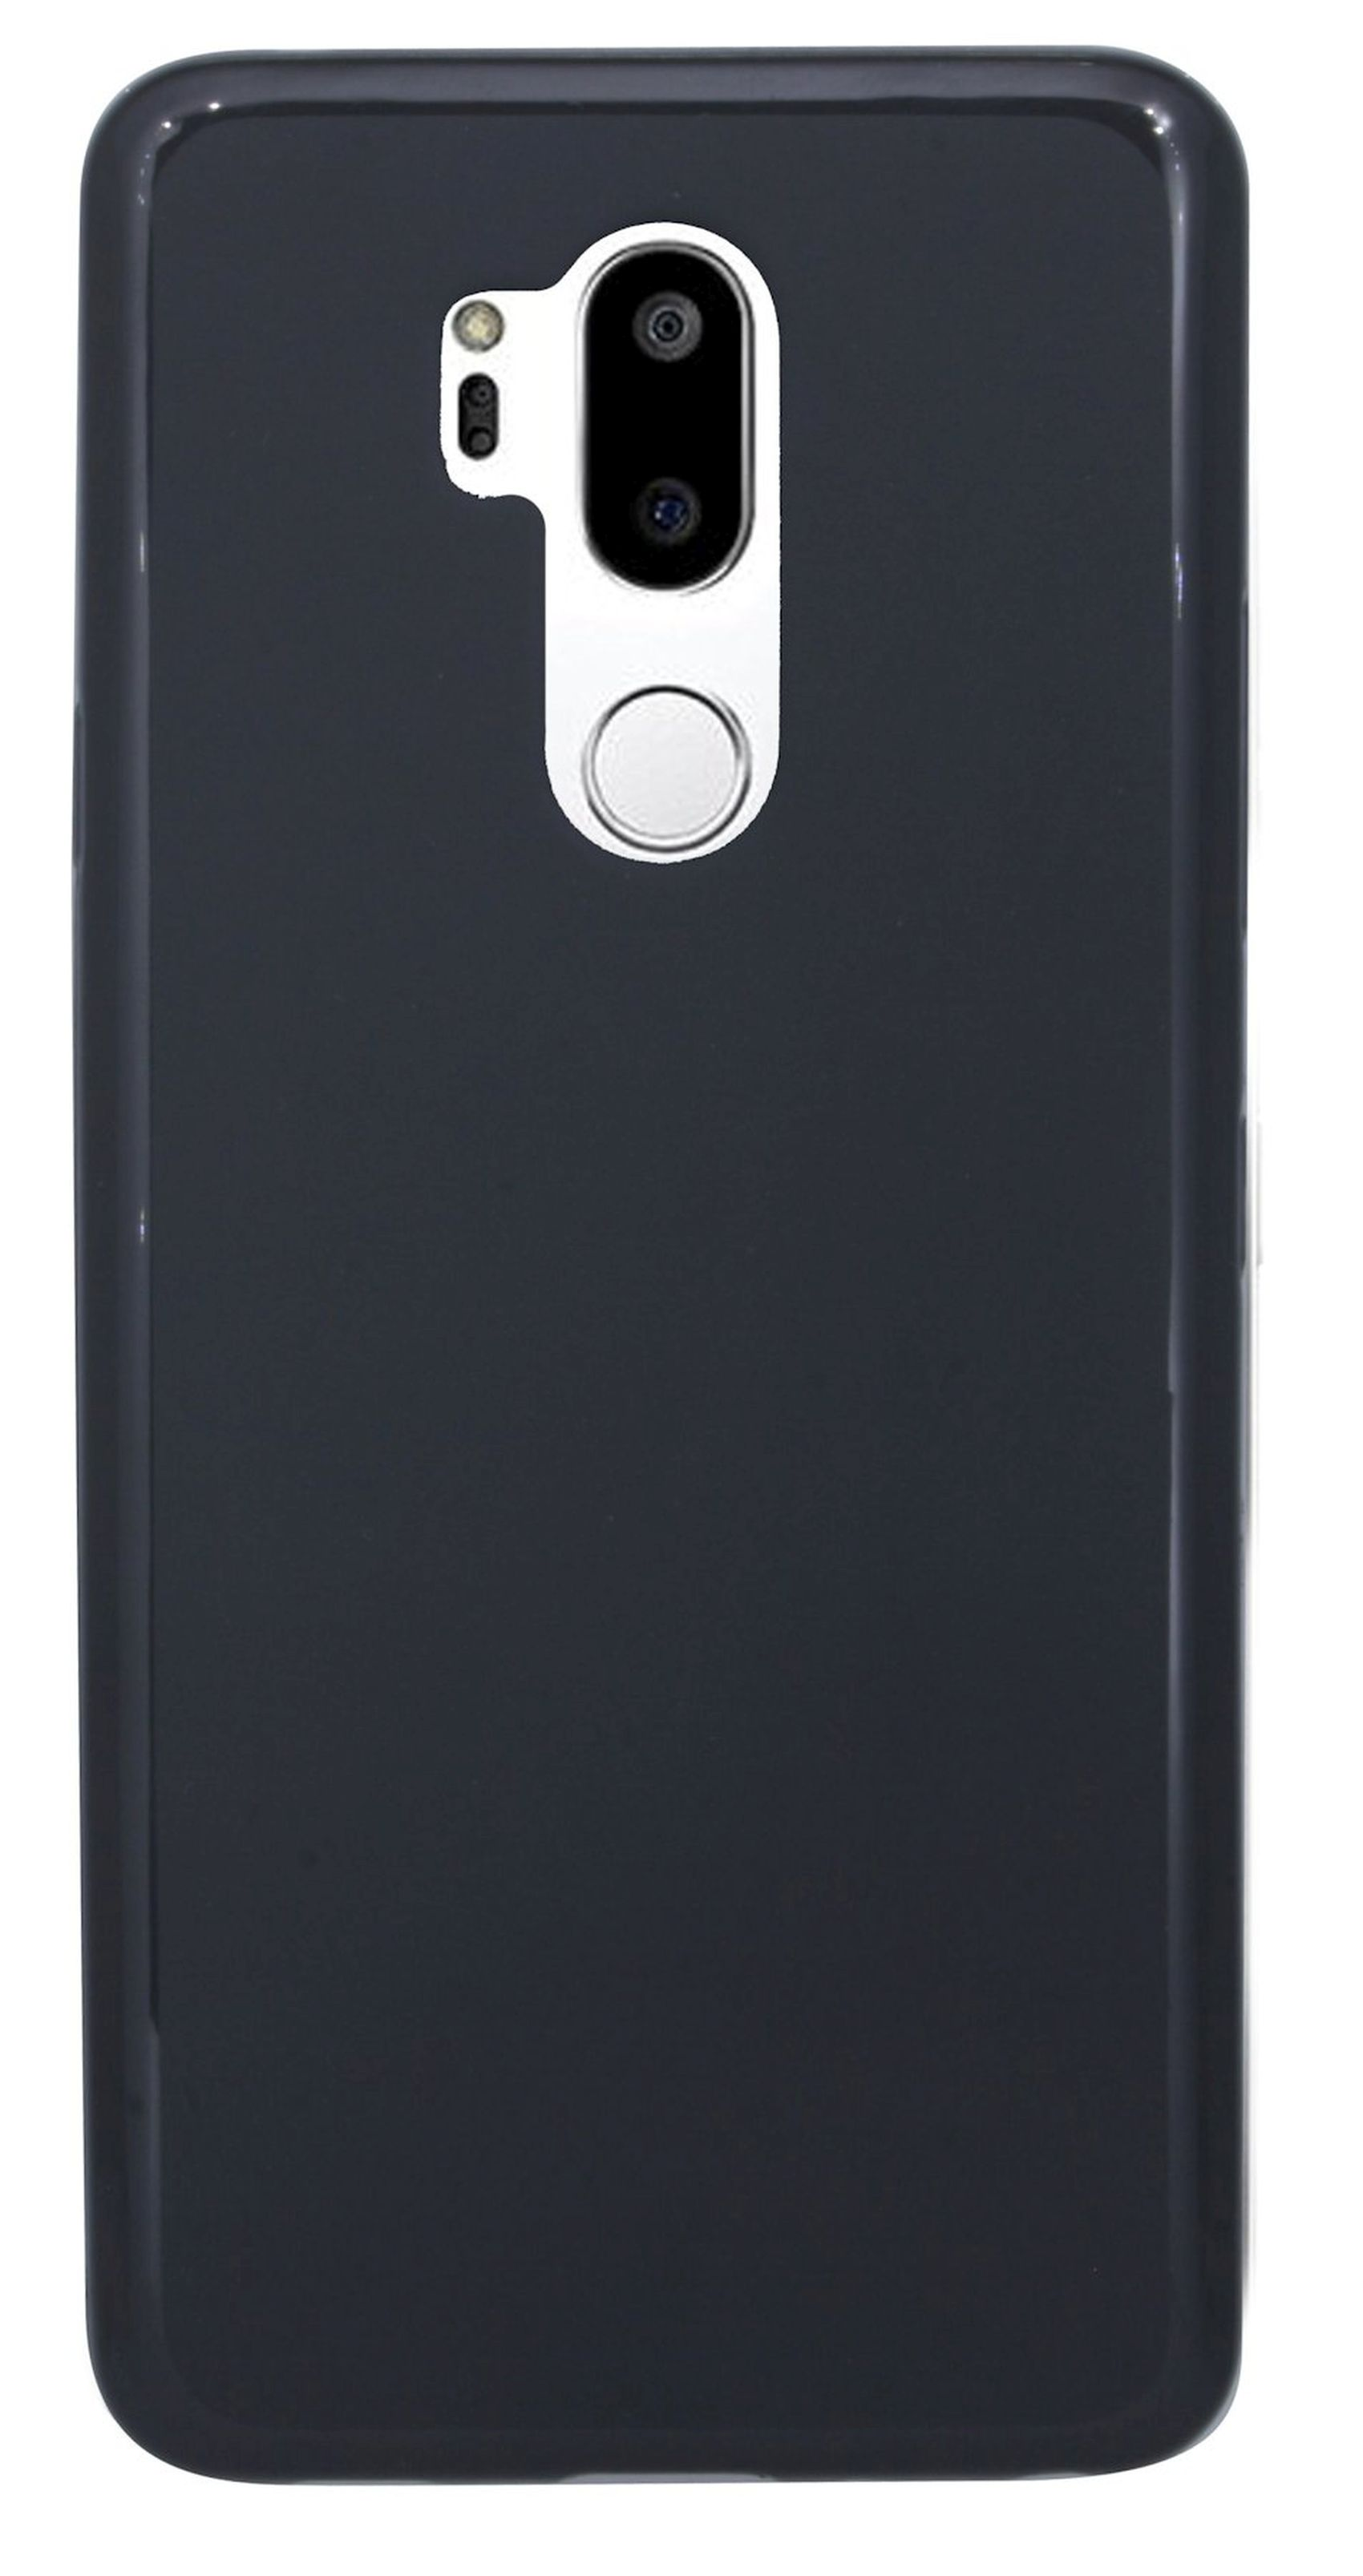 Soft Schwarz, kompatibel Hülle COFI mit Handy G7 G7 TPU Case LG Basic Schutz Schwarz ThinQ Cover ThinQ, Bumper, Silikon LG, cofi1453®